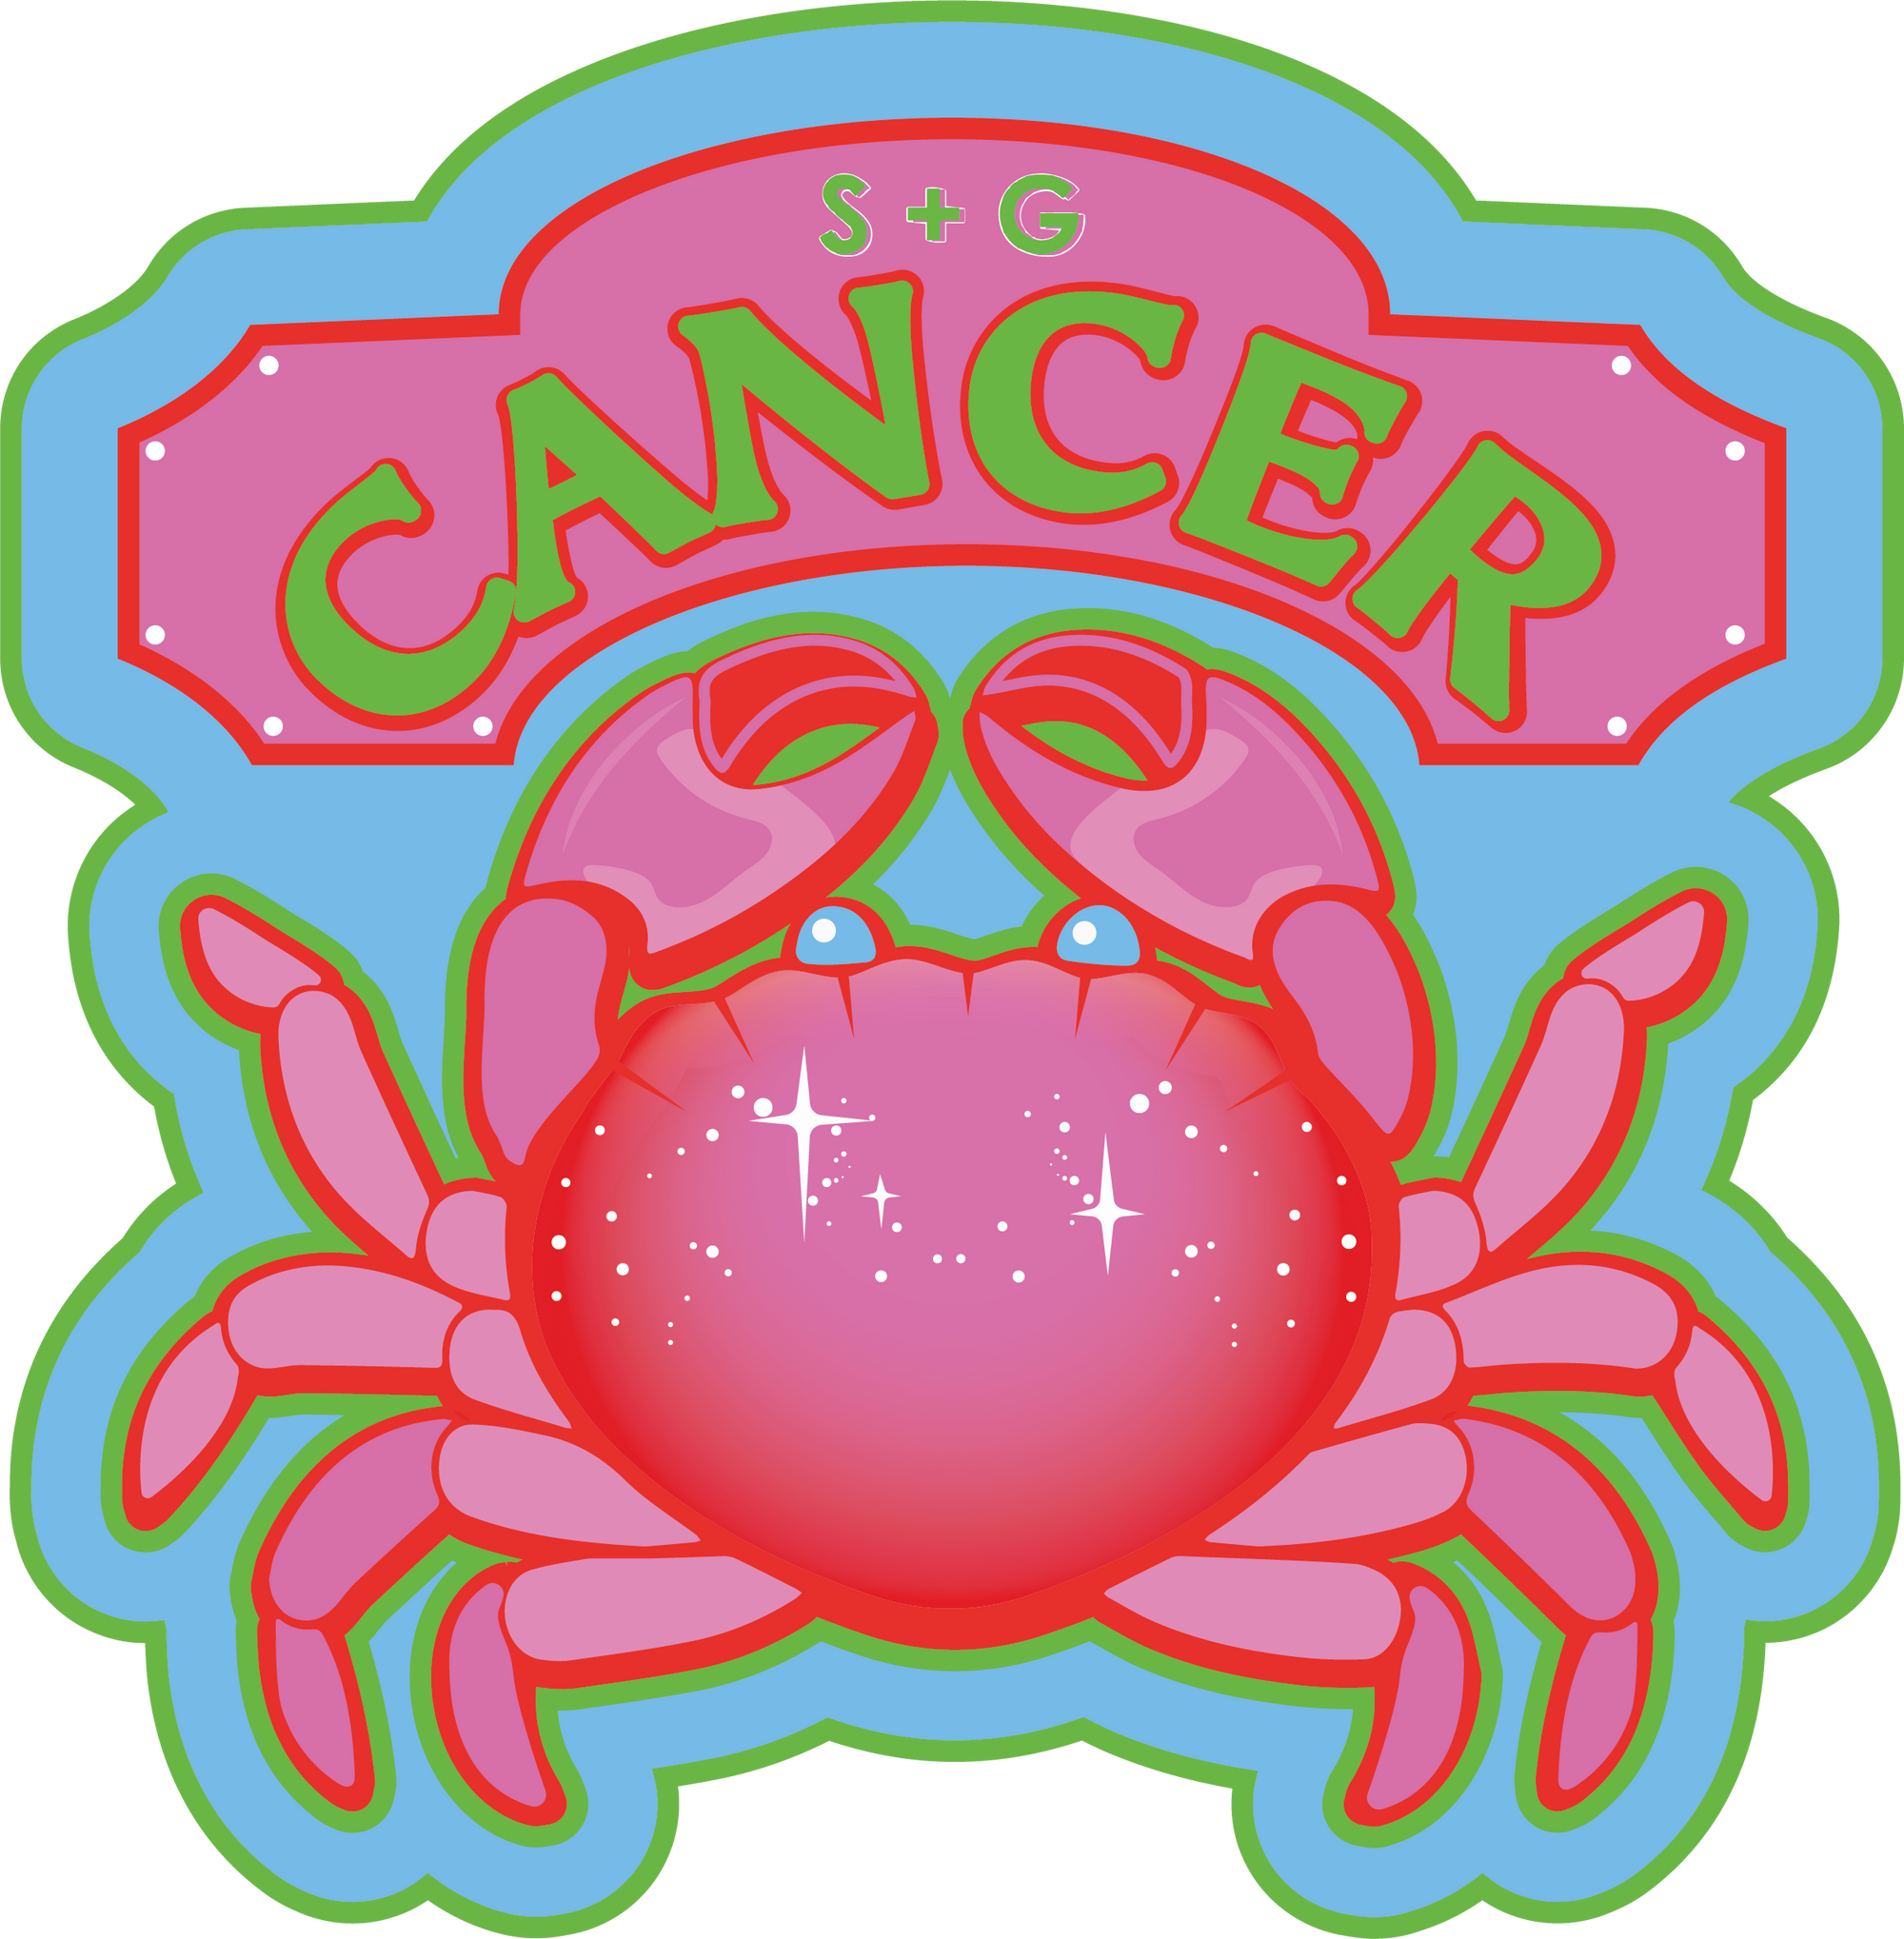 cancer sticker - seol gold